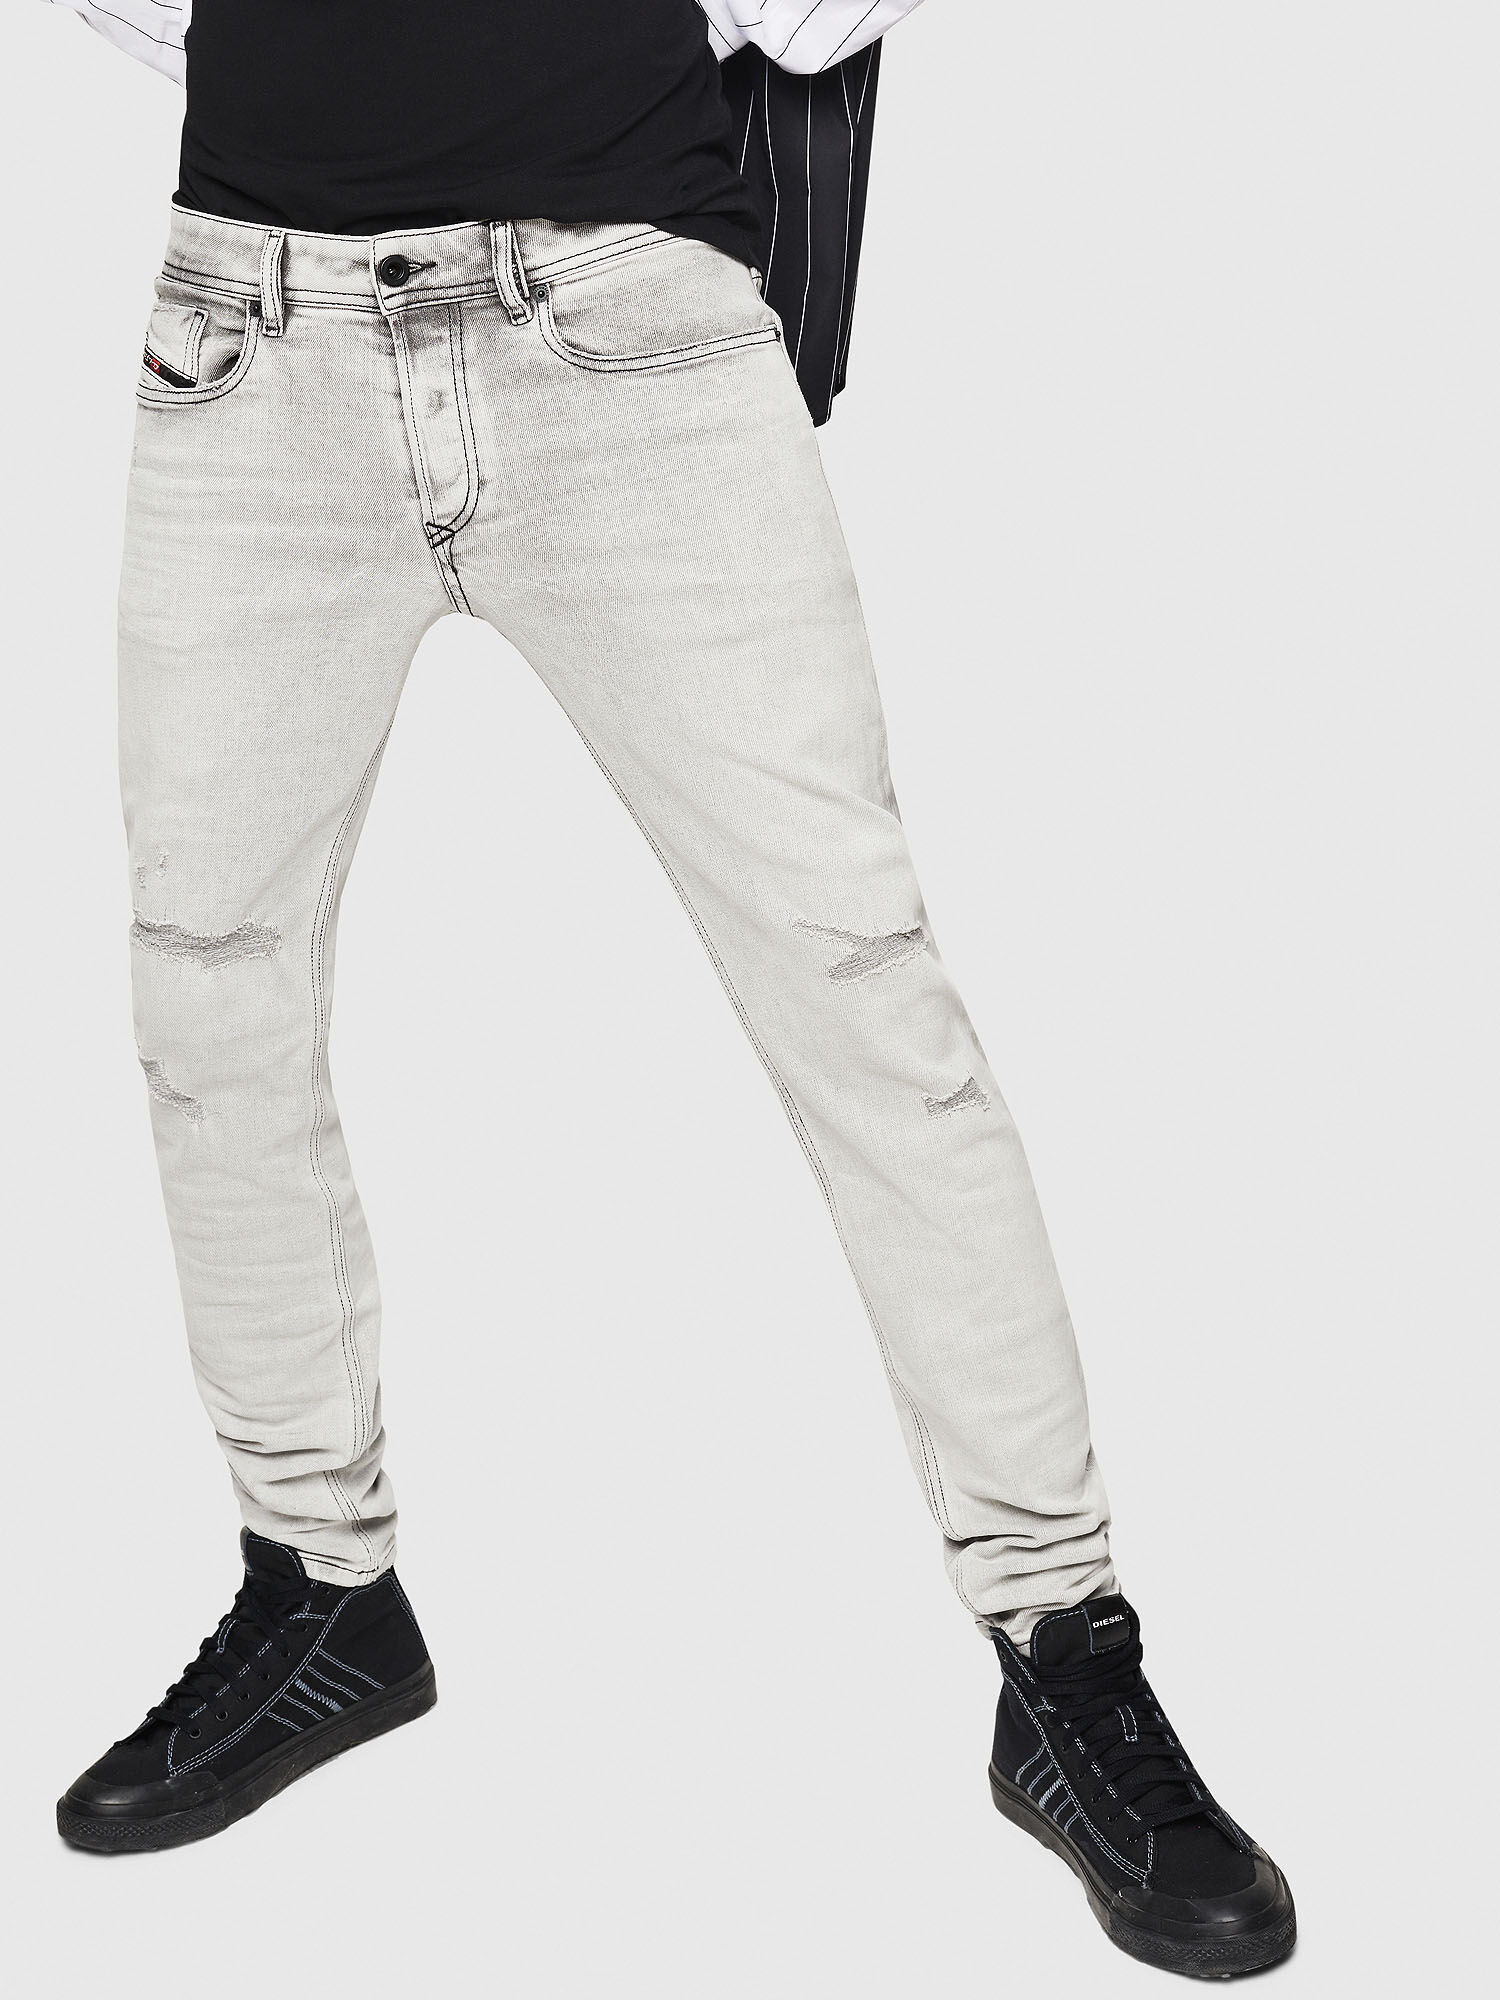 jeans light grey